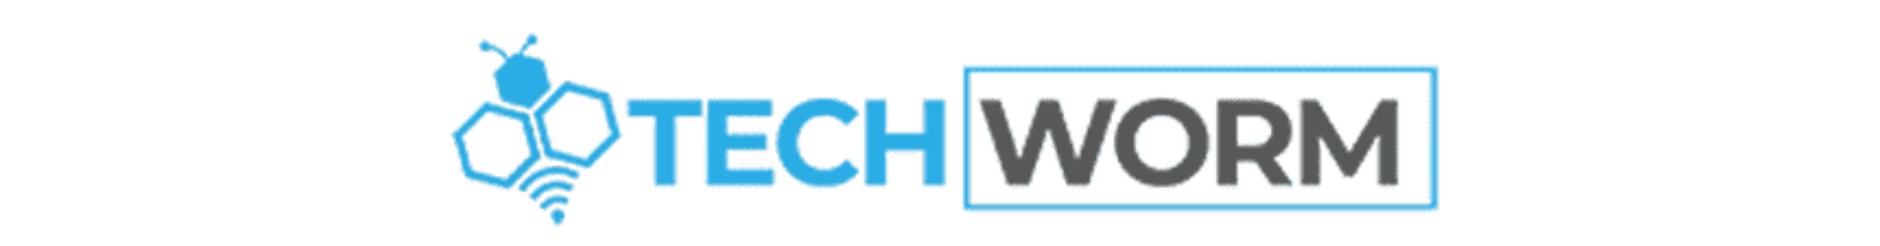 techworm-logo